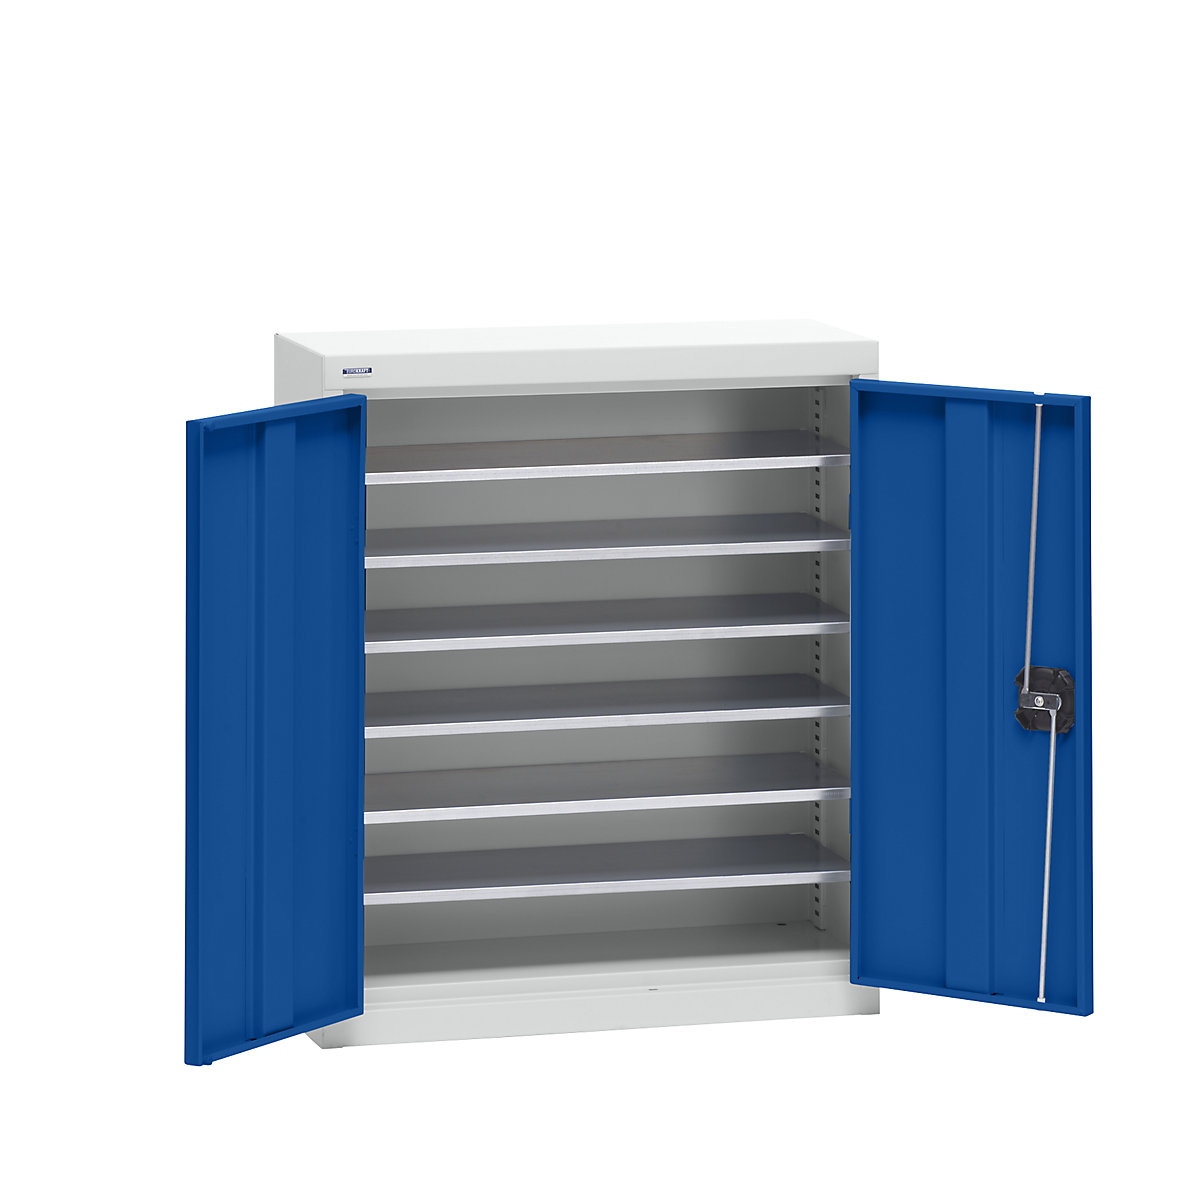 Storage cupboard made of sheet steel – eurokraft pro, height 780 mm, light grey RAL 7035 / gentian blue RAL 5010, 6 shelves-10